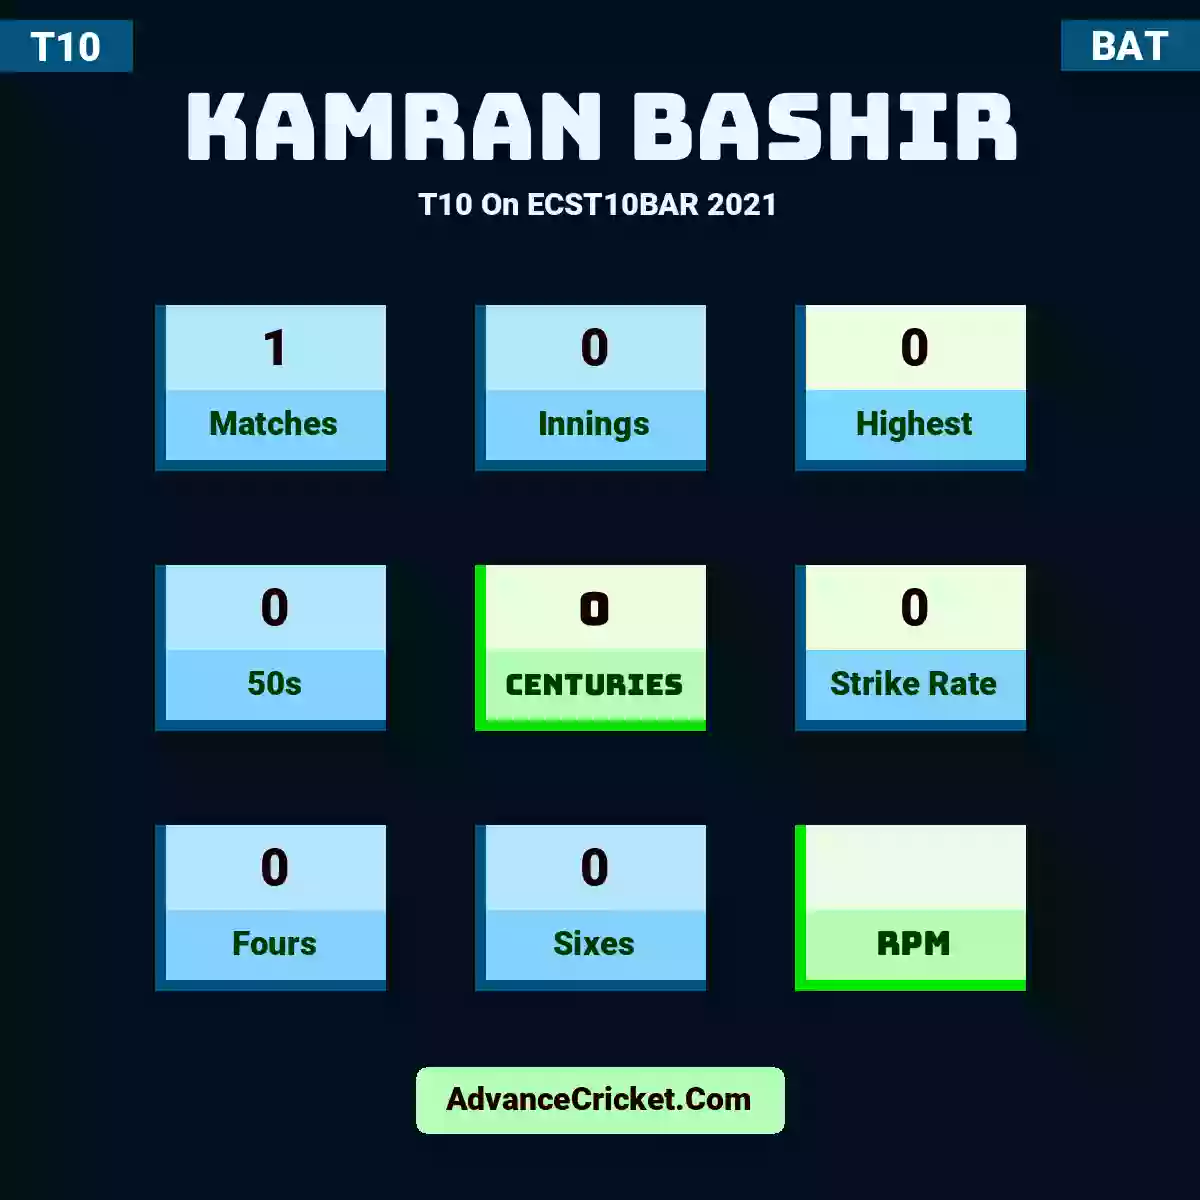 Kamran Bashir T10  On ECST10BAR 2021, Kamran Bashir played 1 matches, scored 0 runs as highest, 0 half-centuries, and 0 centuries, with a strike rate of 0. K.Bashir hit 0 fours and 0 sixes.